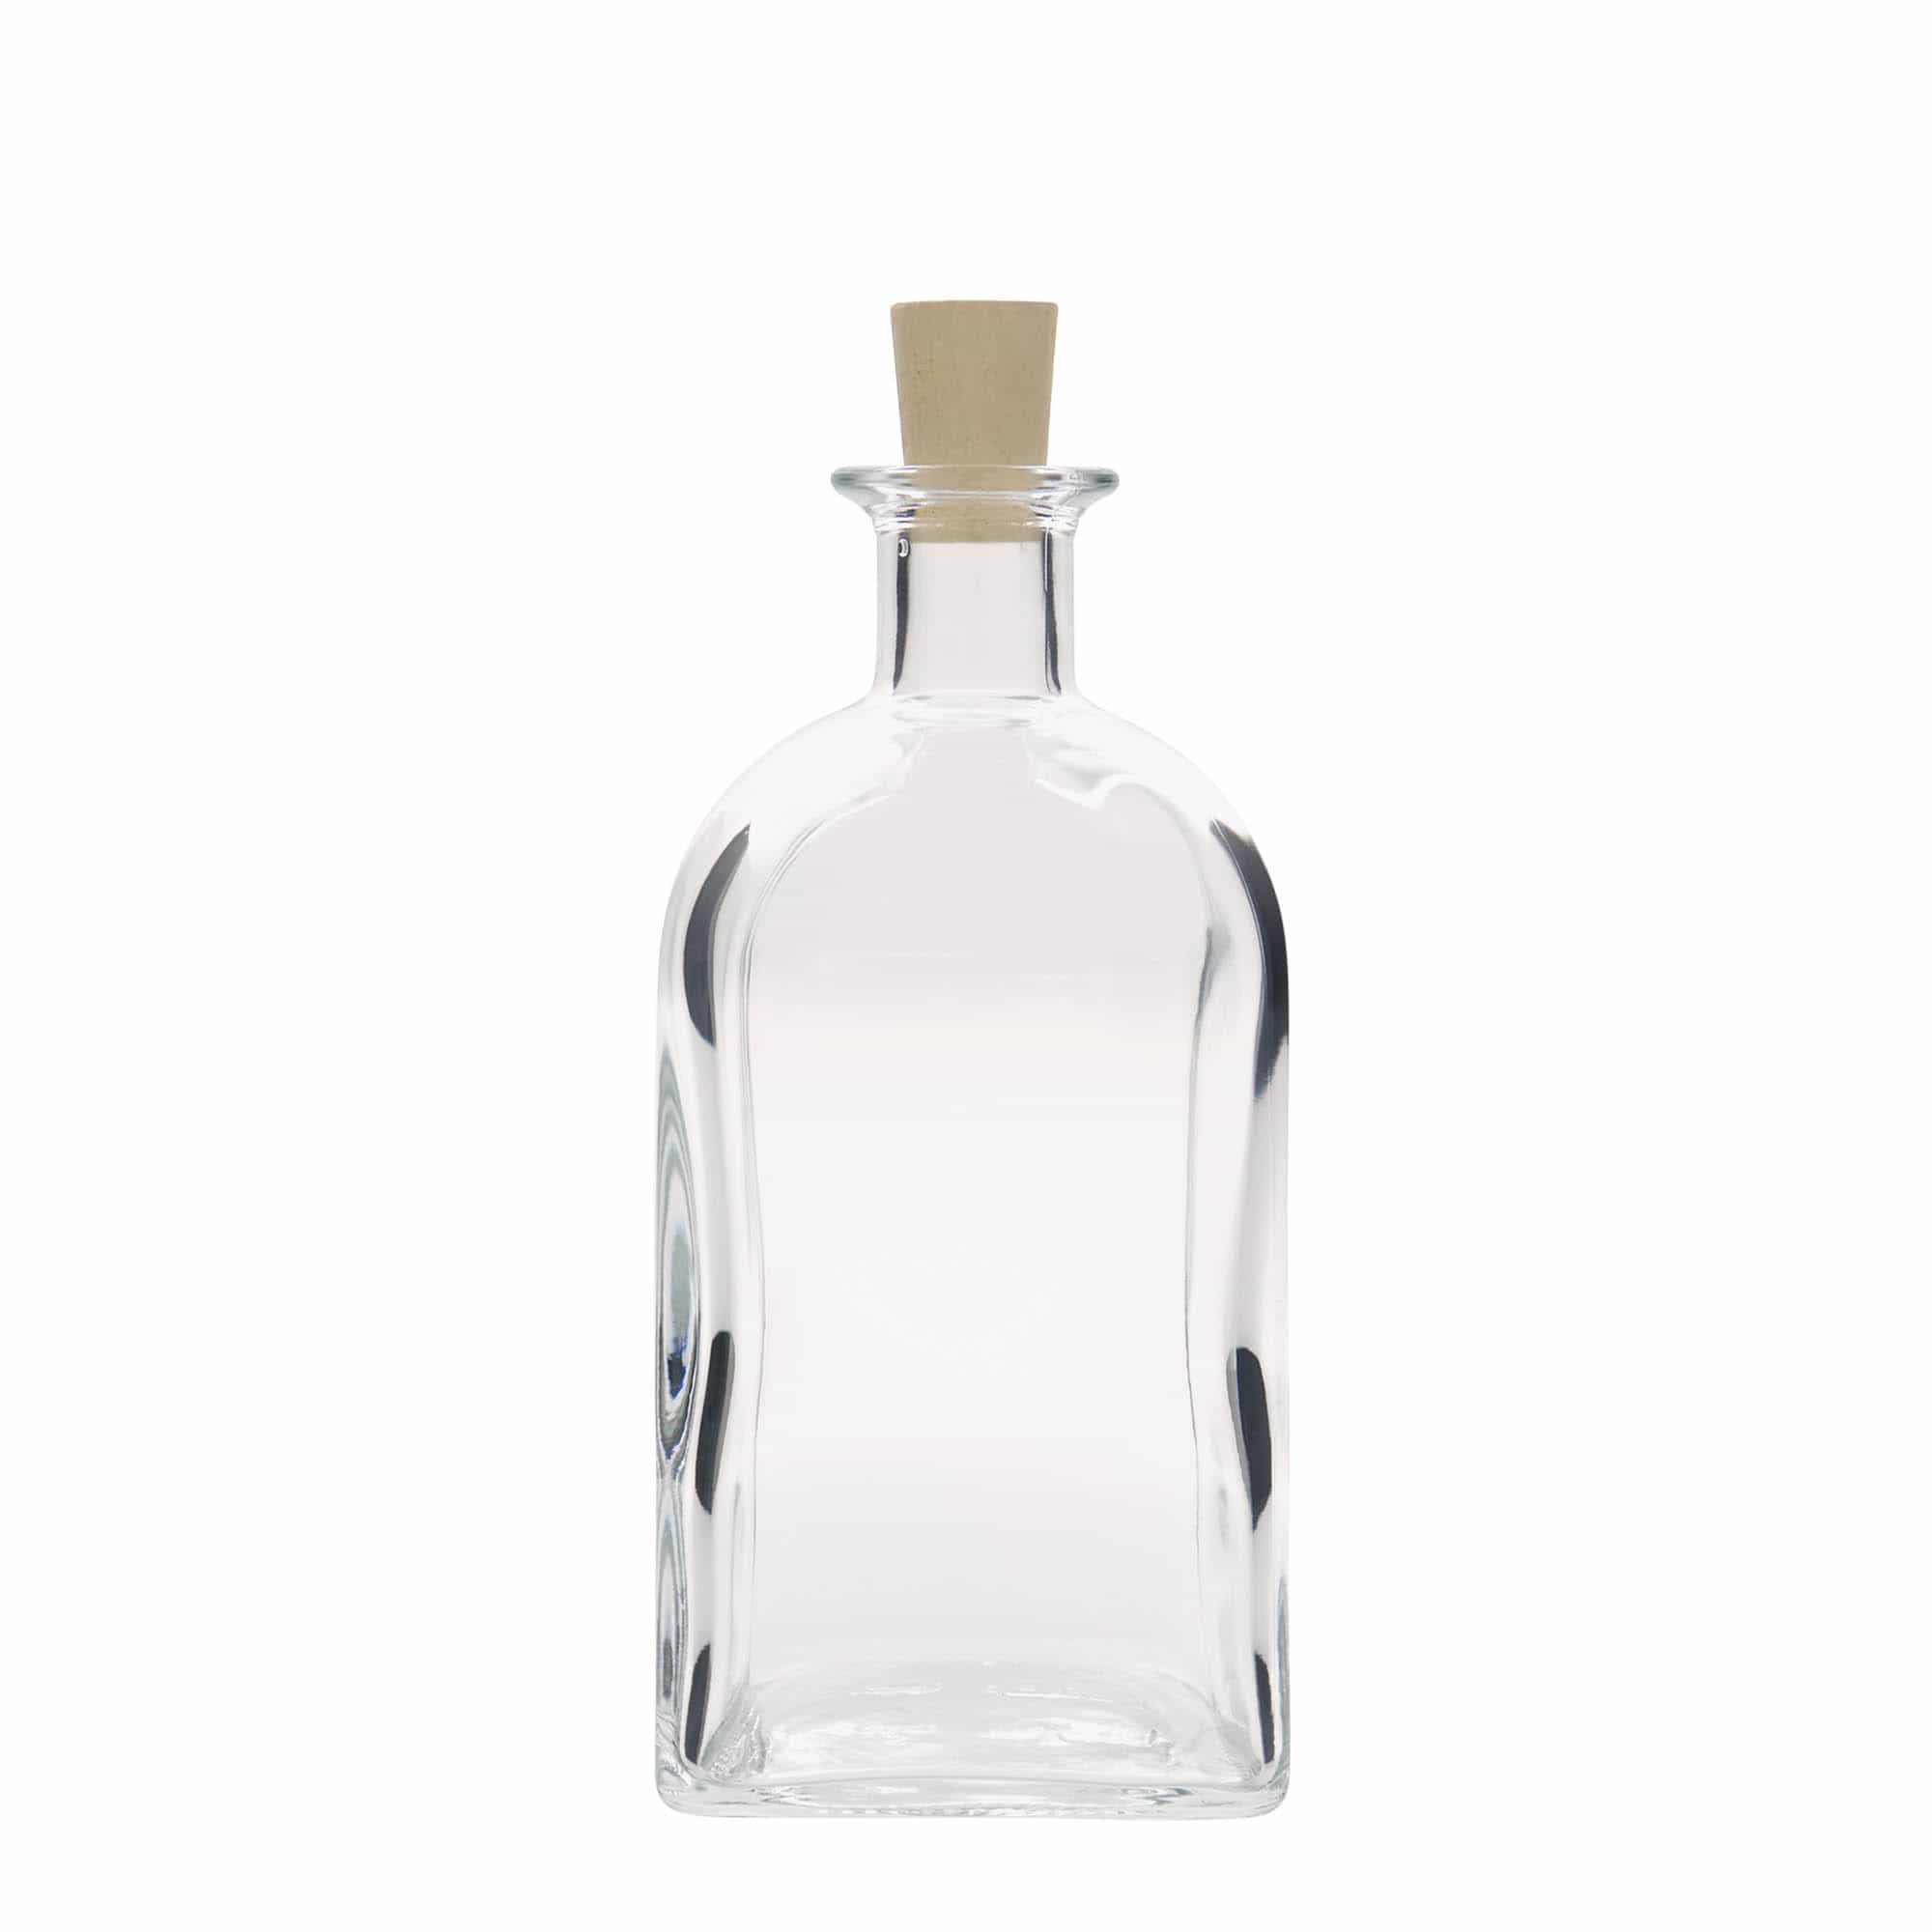 700 ml glass apothecary bottle Carré, square, closure: cork